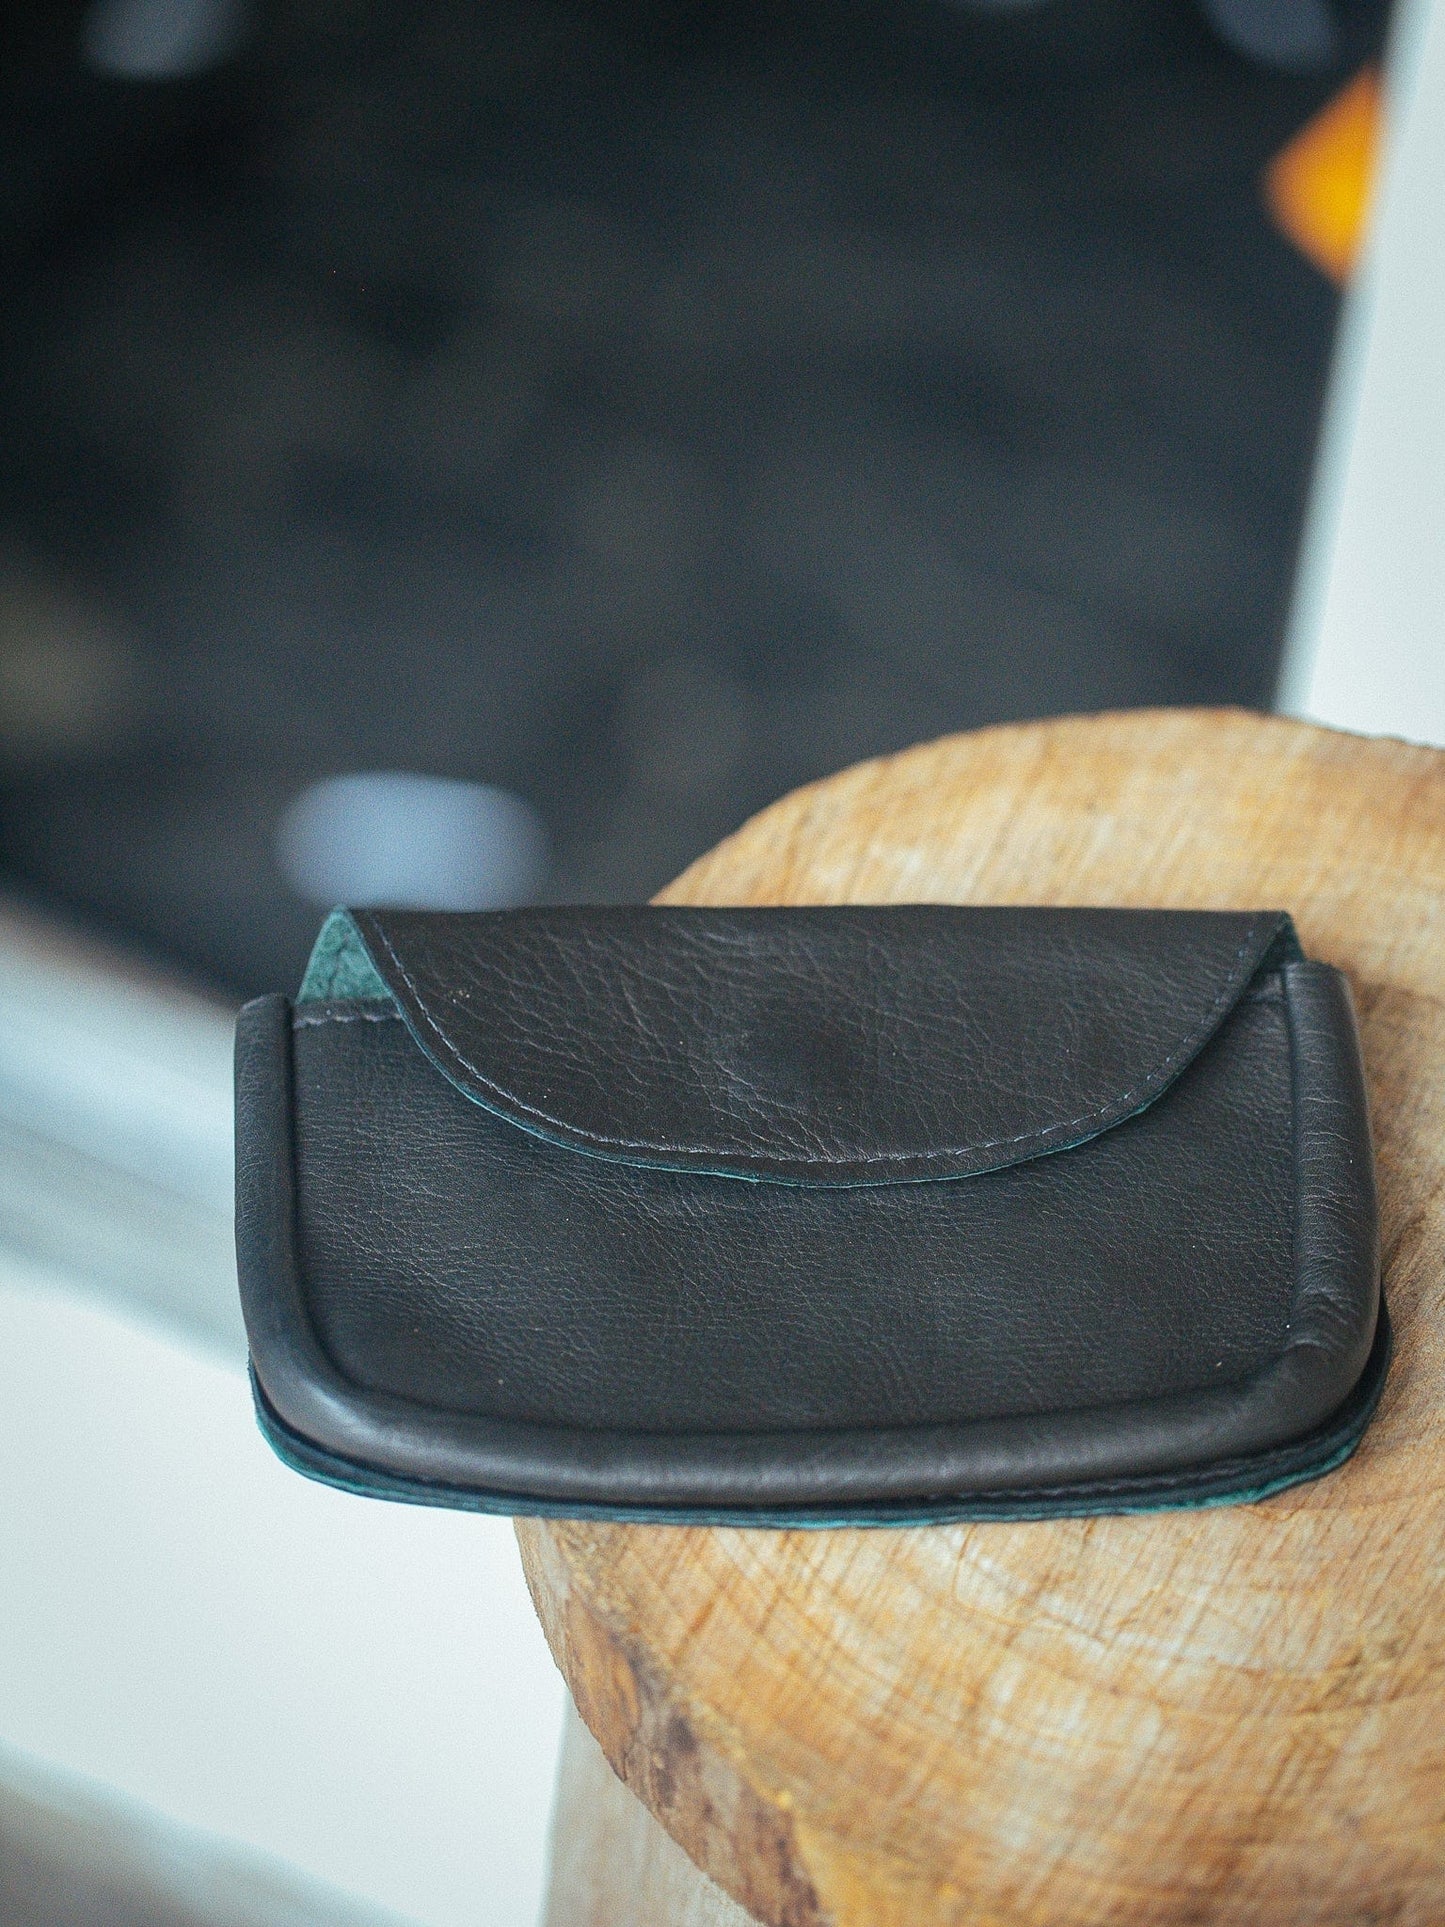 The Real McCaul Purses Black / Cowhide / Large Phone Holder Pouch for Belt - Horizontal Australian Made Australian Owned Leather Belt Pouch for Phone/Sunglasses Australian Made